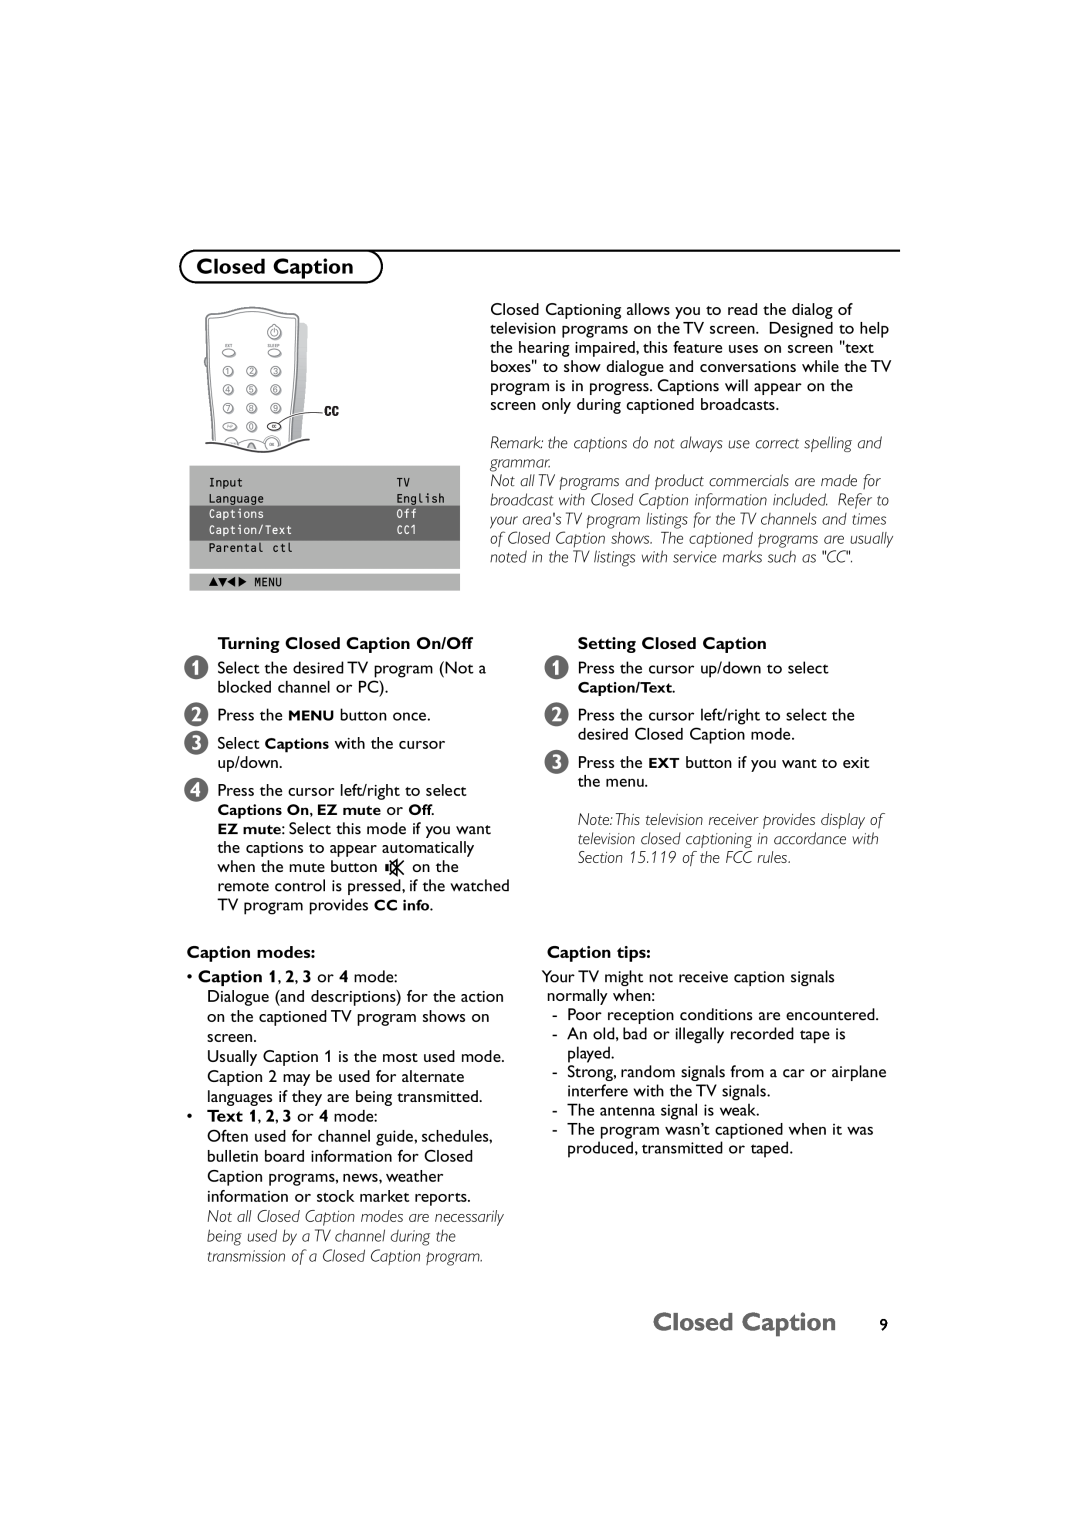 Technicolor - Thomson 15 manual Turning Closed Caption On/Off, Setting Closed Caption, Caption tips 